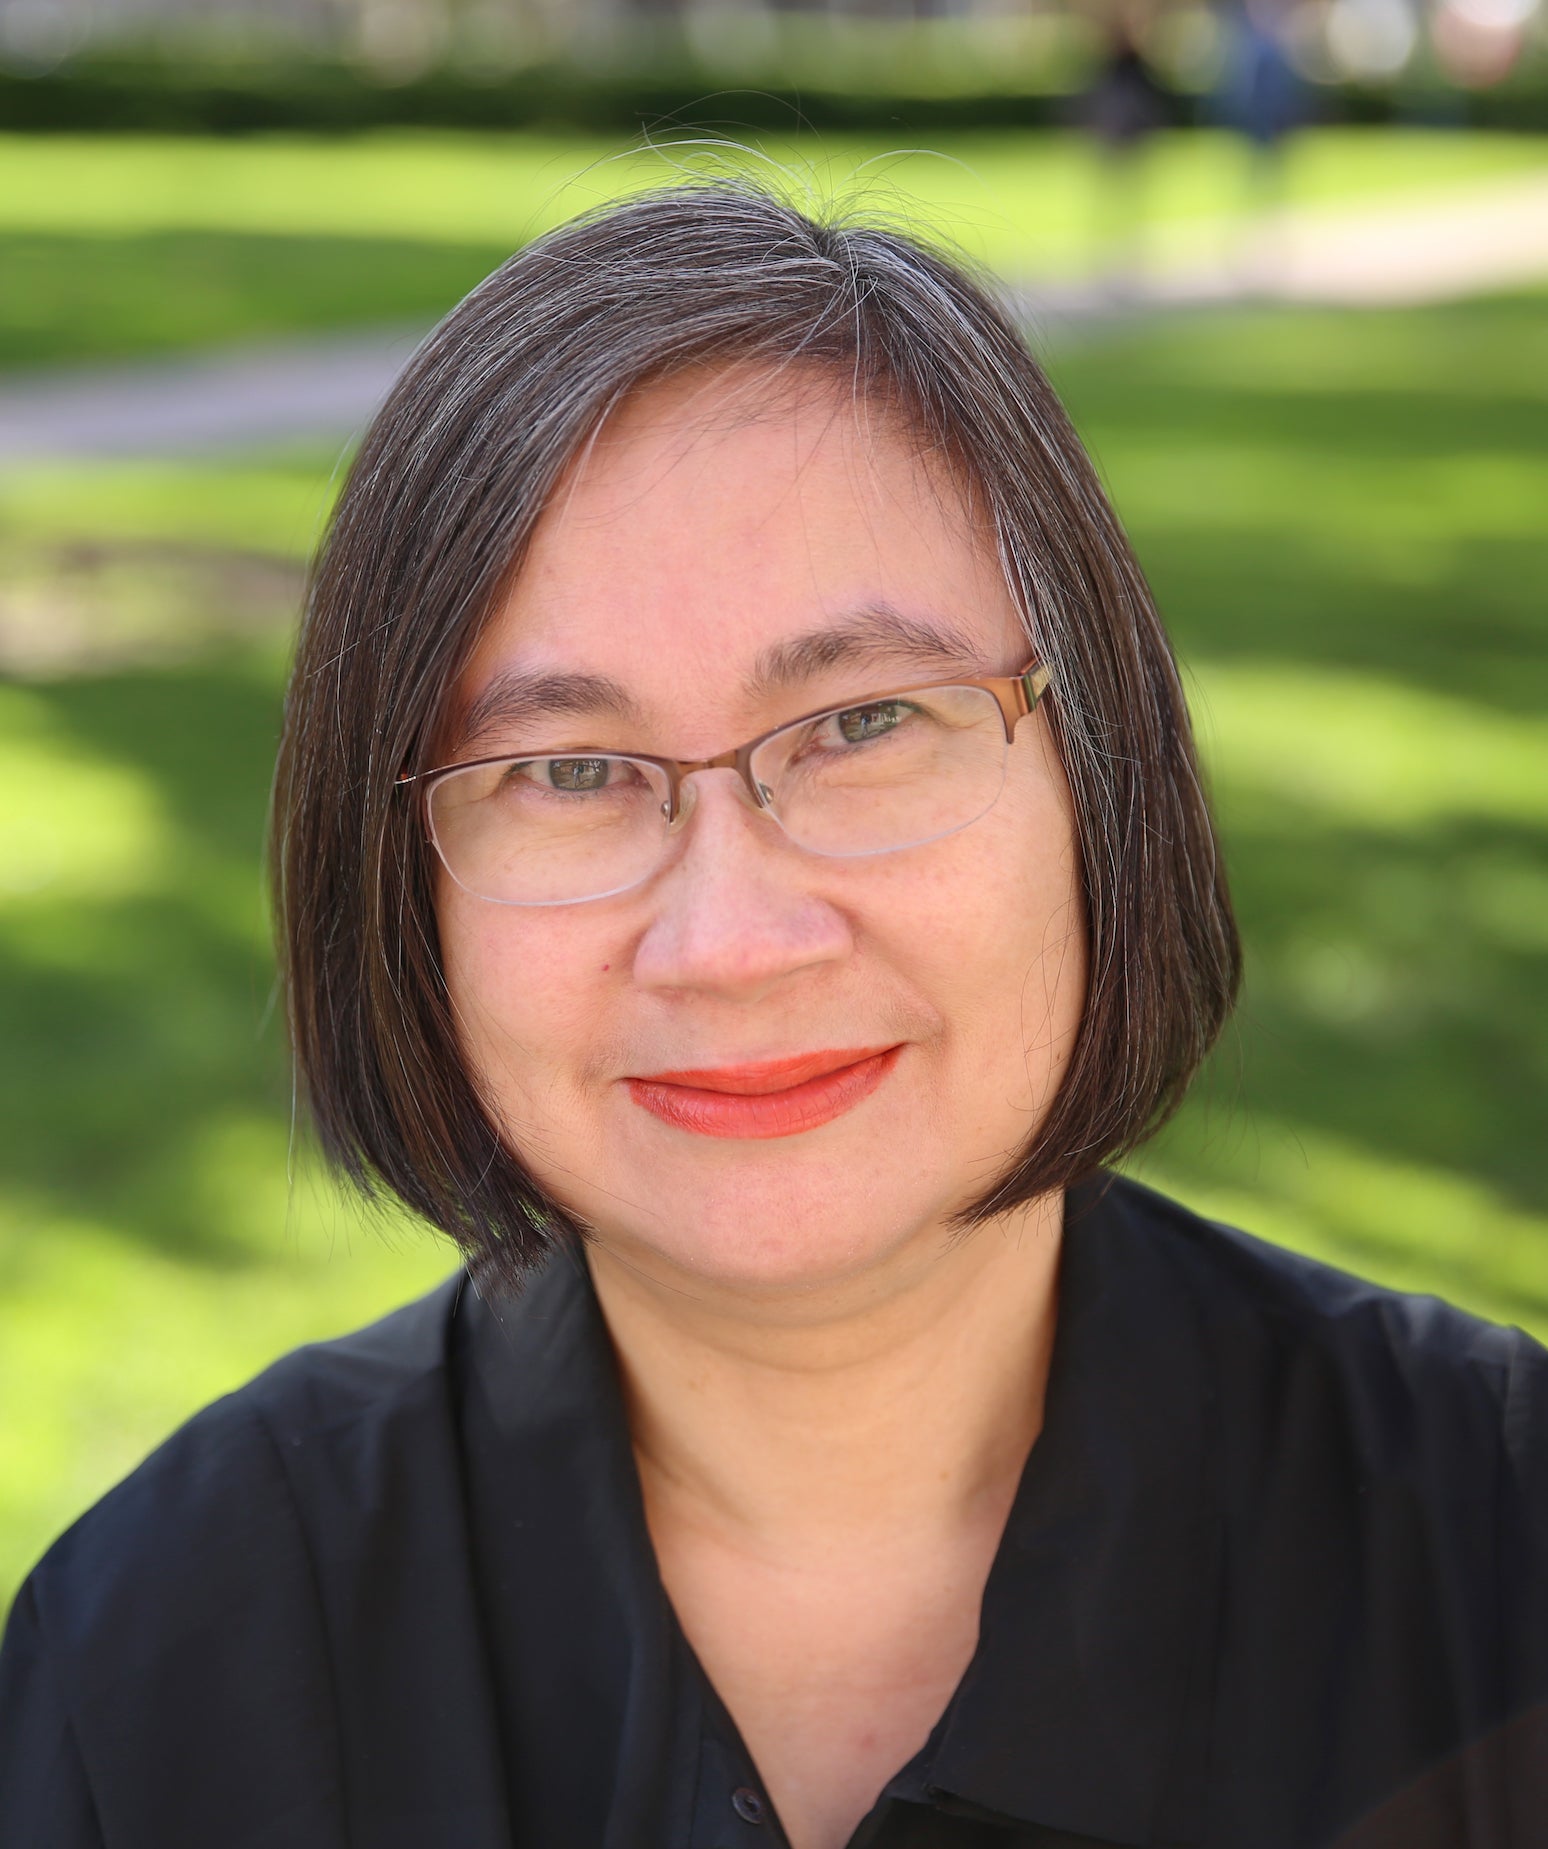 A photo of USC art History professor Lisa Pon